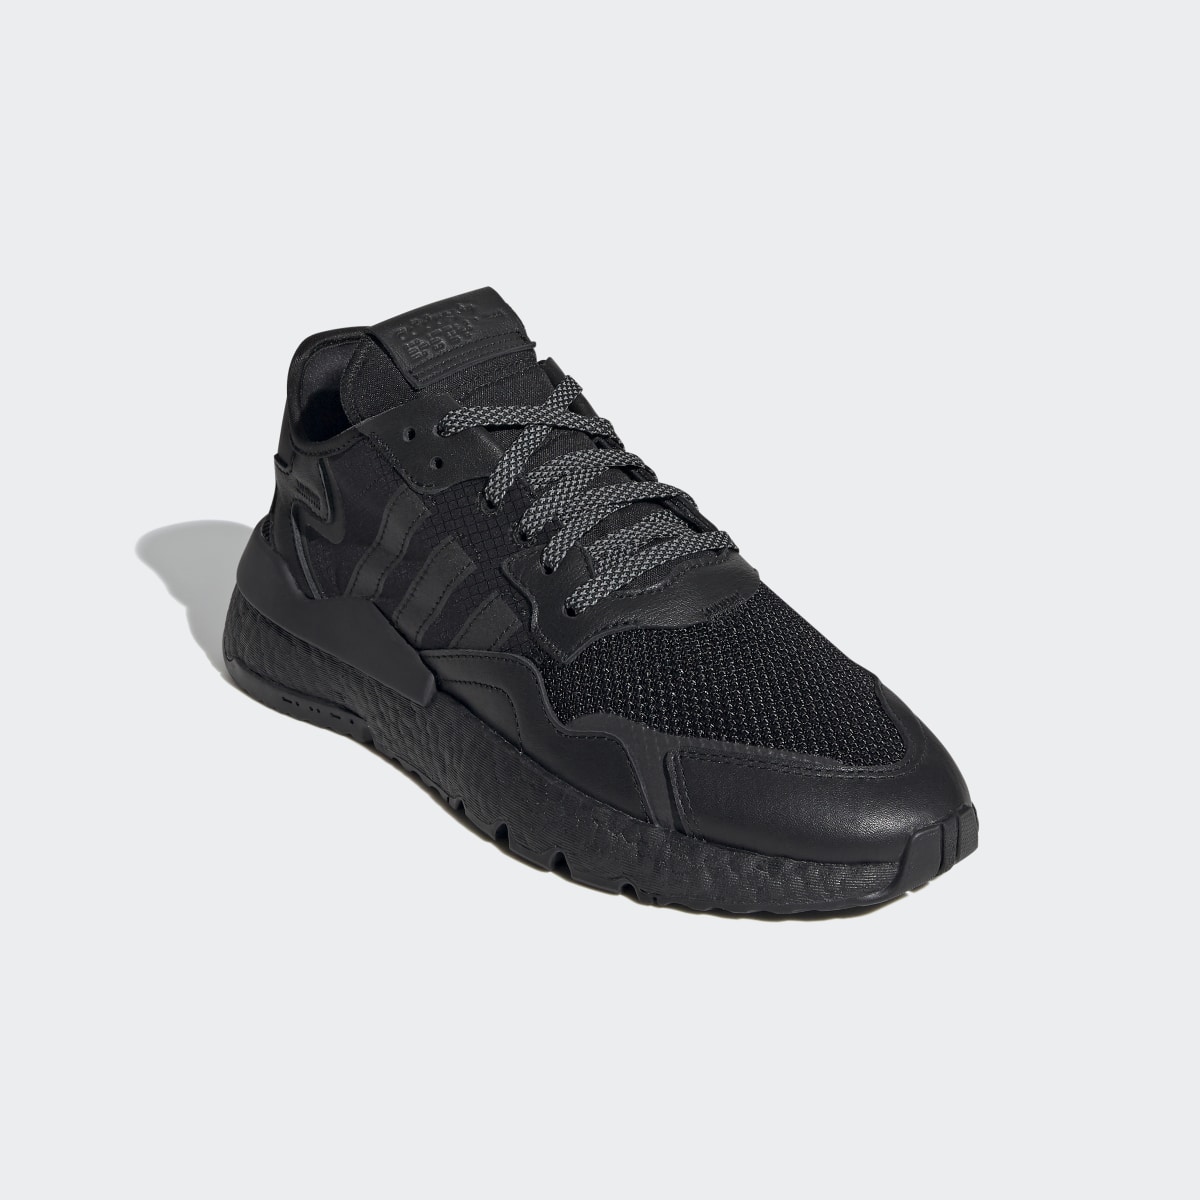 Adidas Nite Jogger Shoes. 9